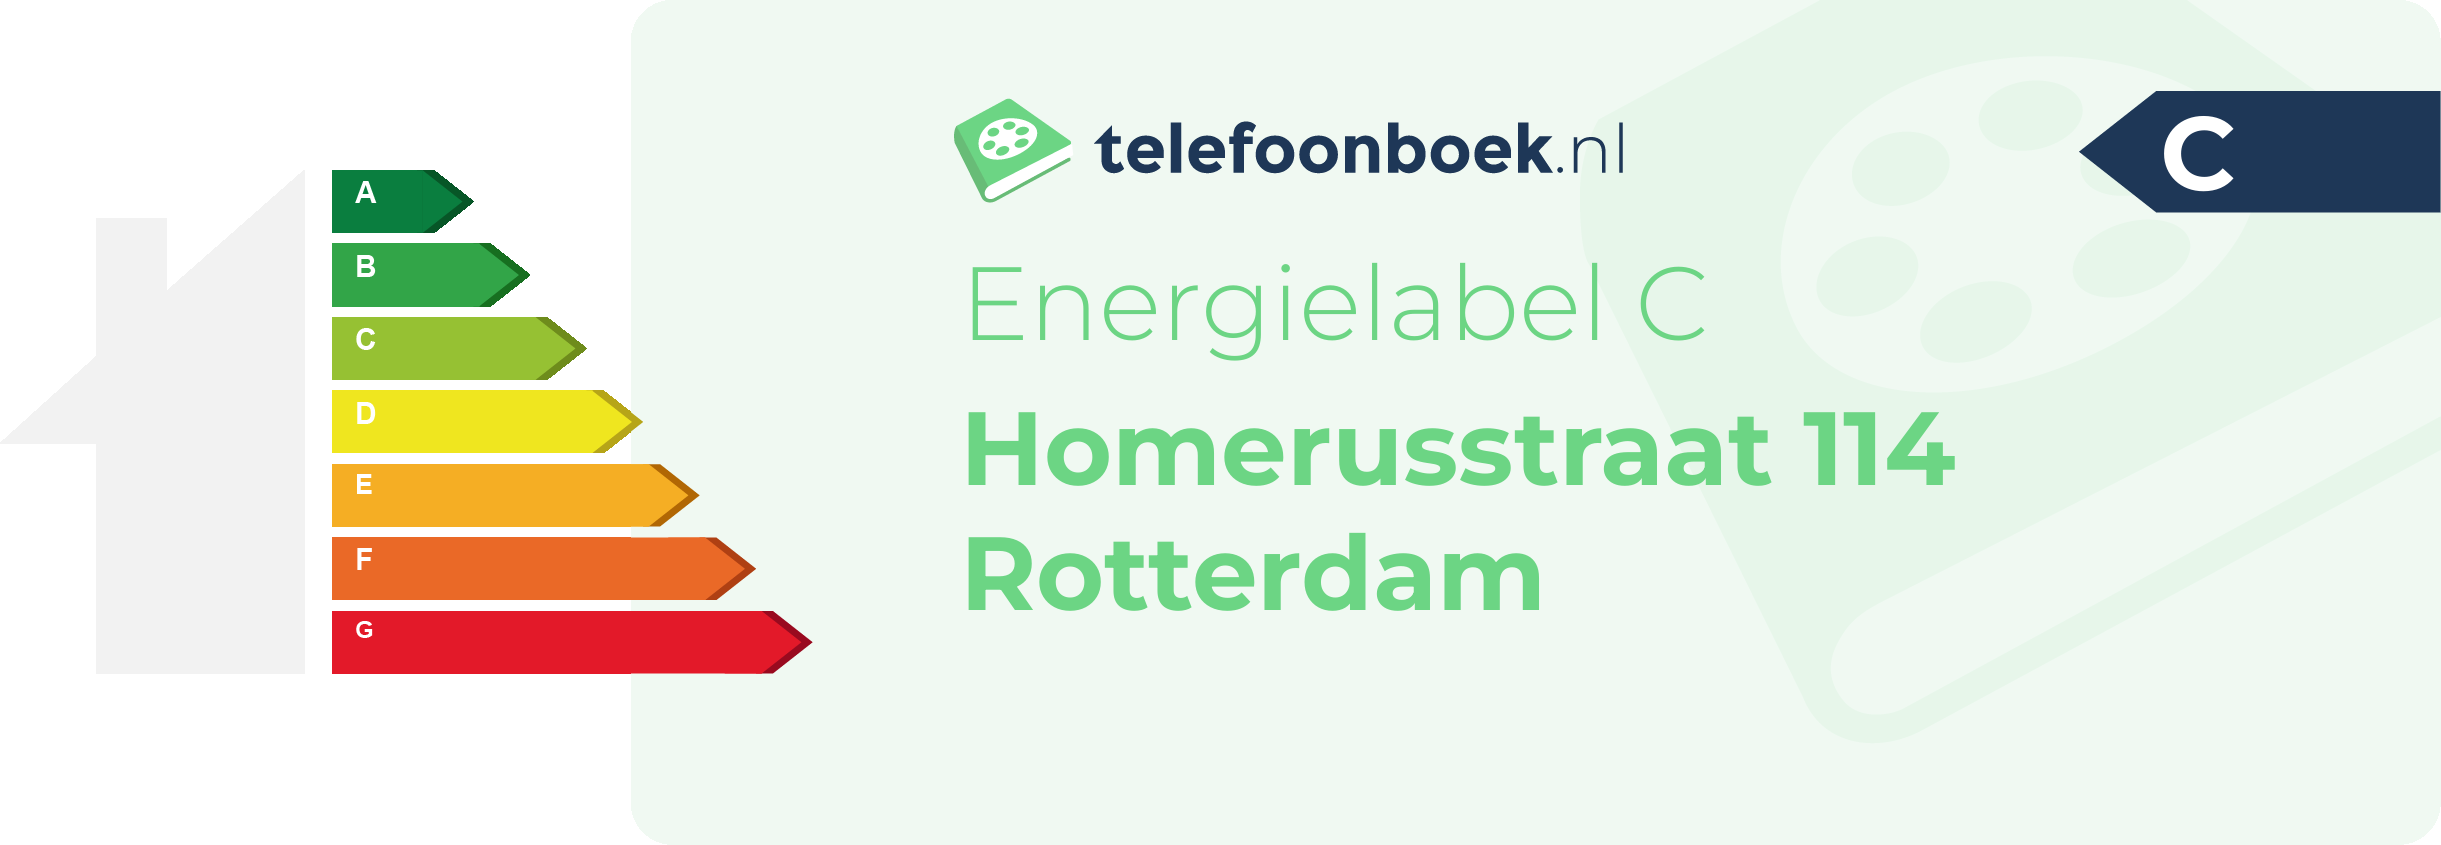 Energielabel Homerusstraat 114 Rotterdam